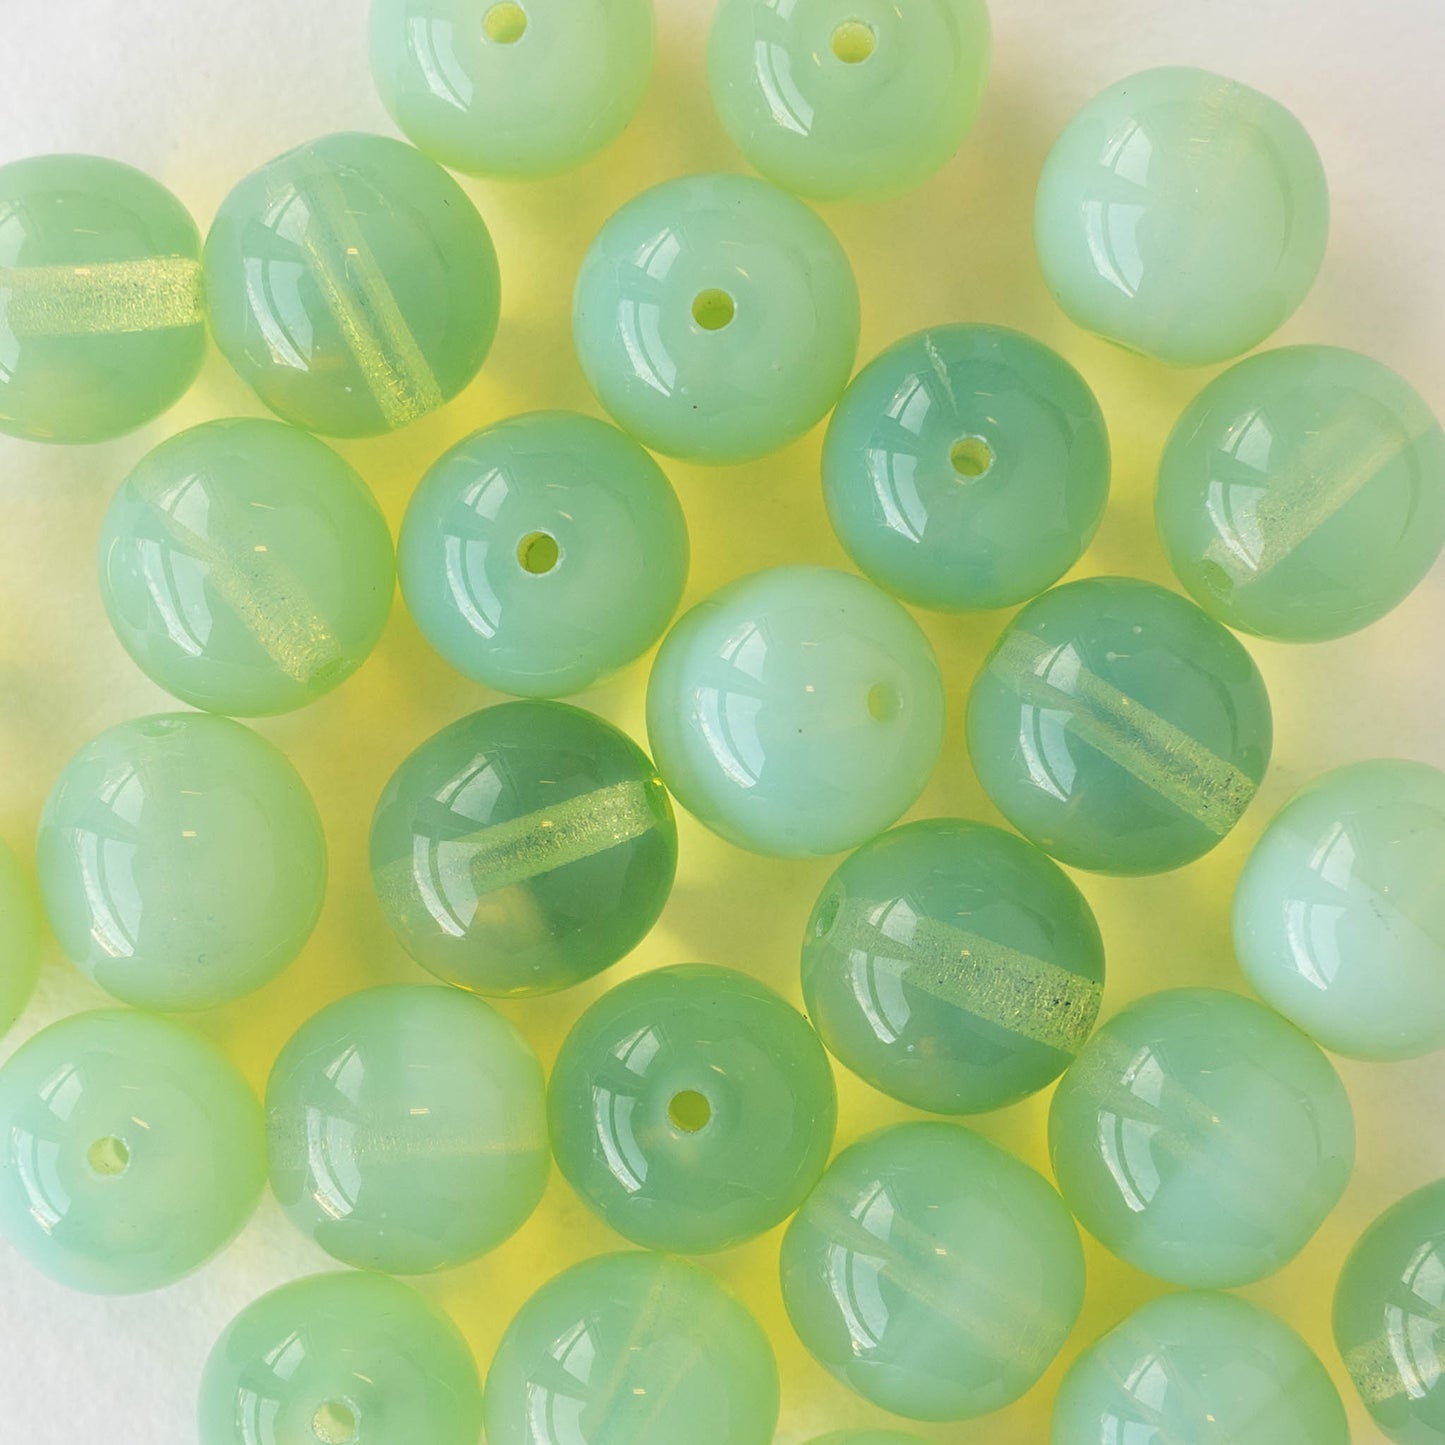 10mm Round Glass Beads - Opaline Celadon - 20 Beads